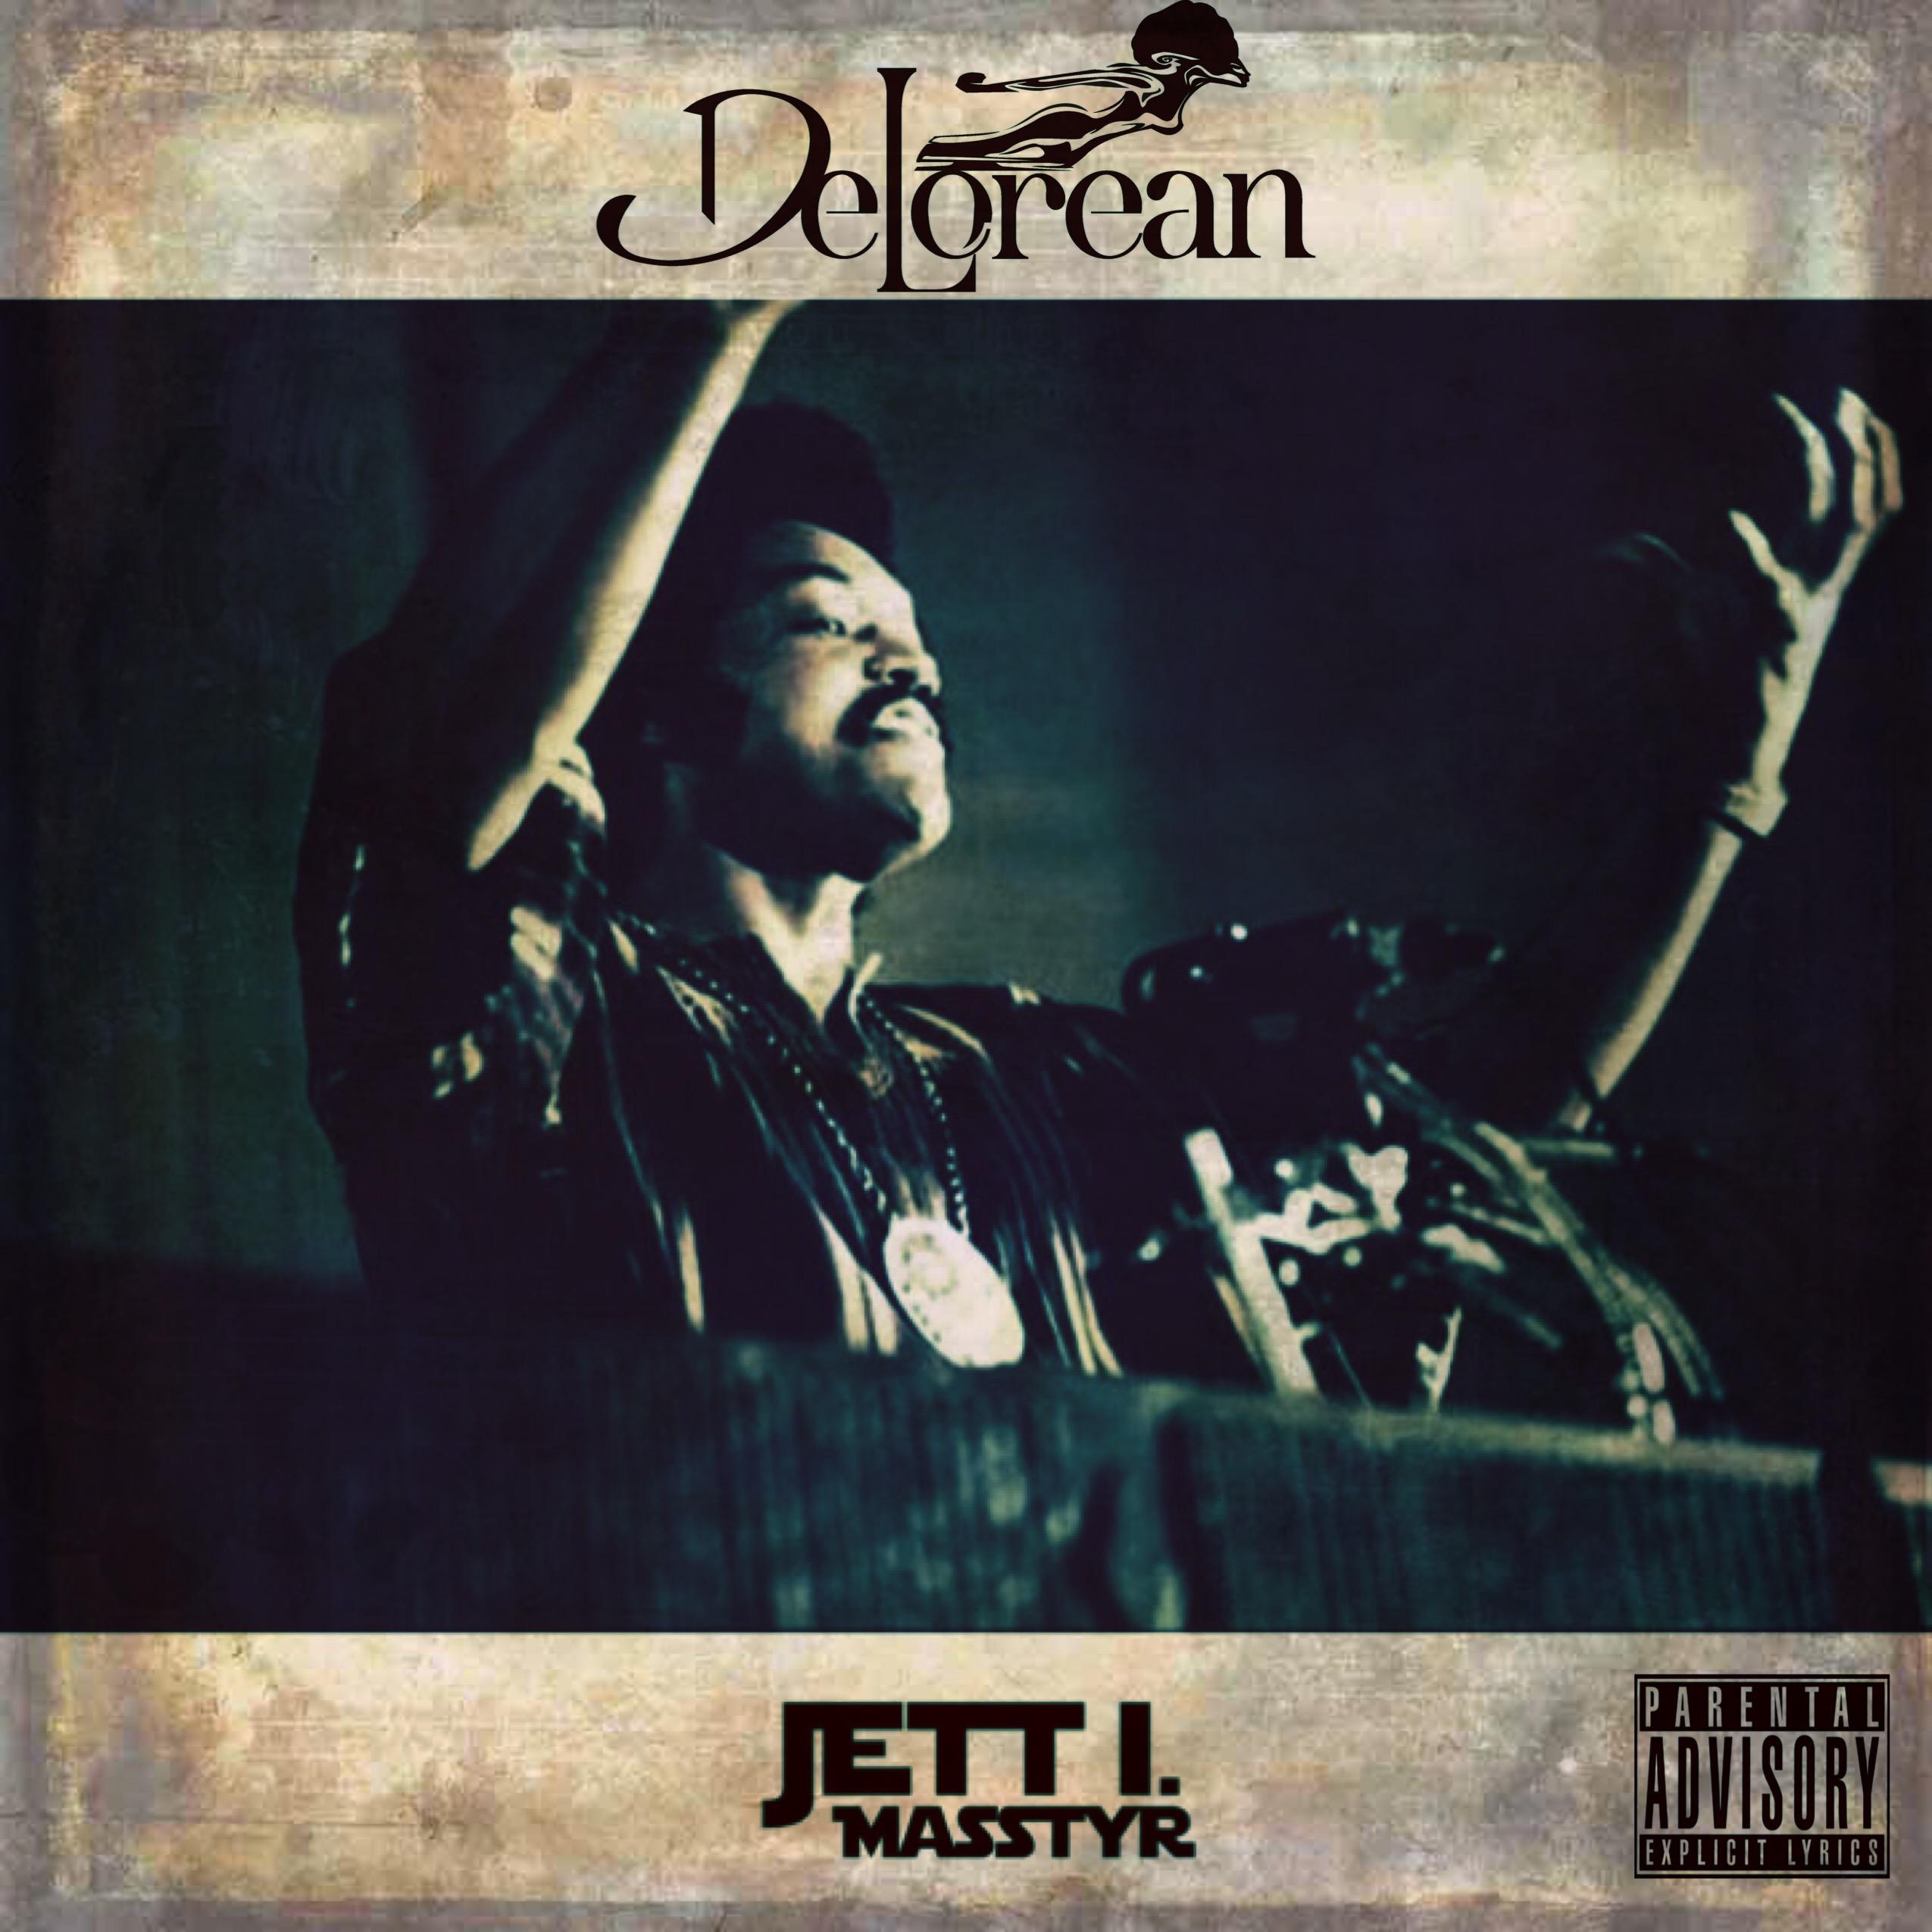 DeLorean – Jesse Jackson [prod. Jett I. Masstyr]